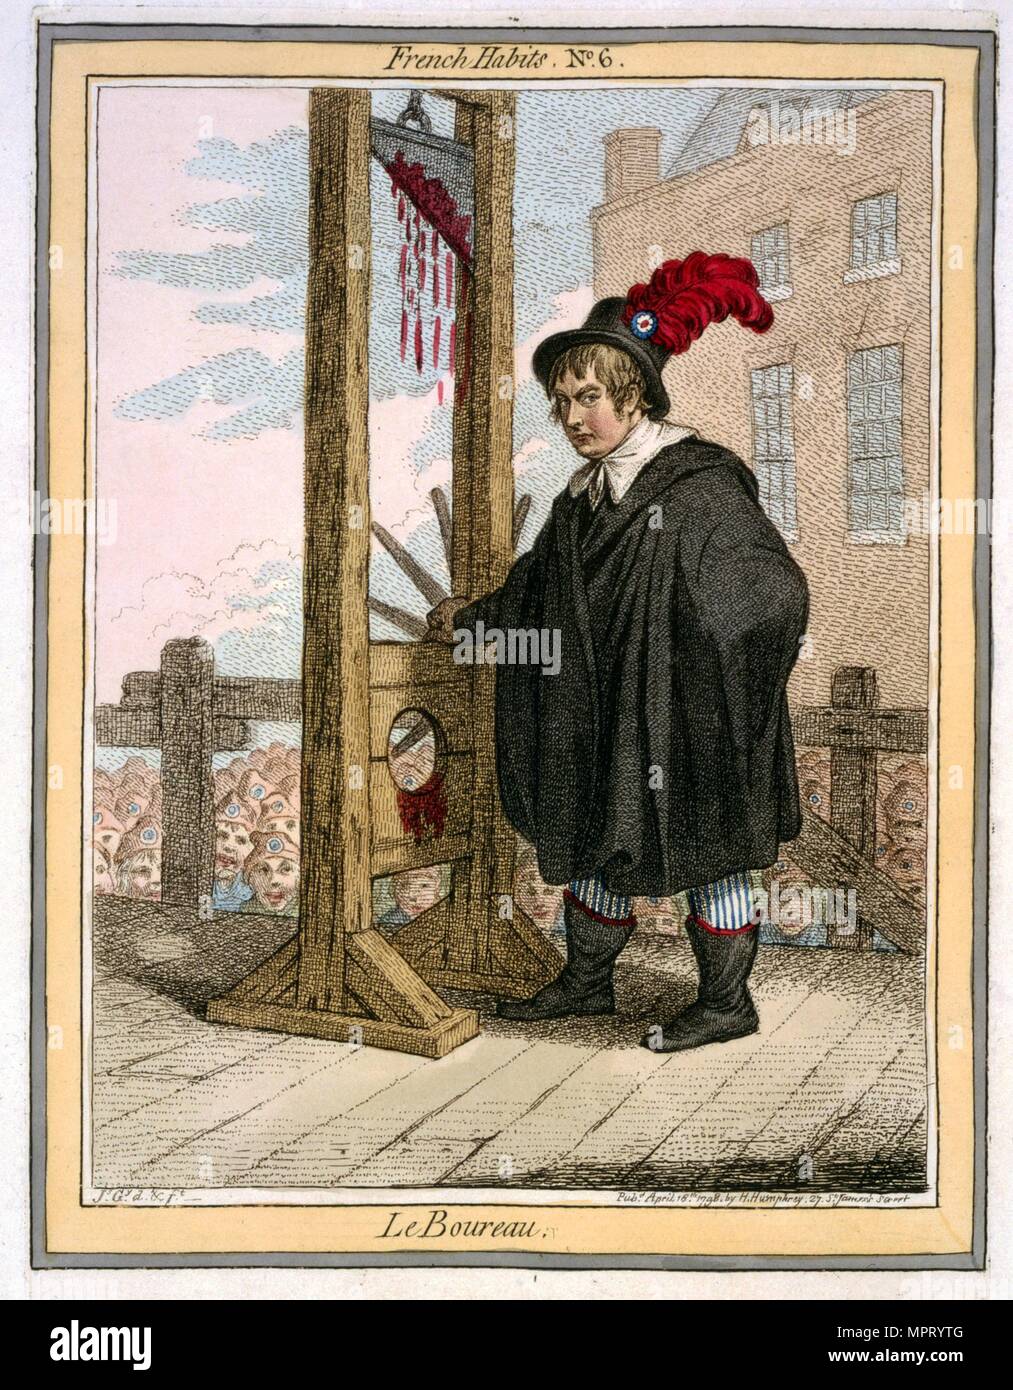 Le Boureau, French Habits No. 6, 1798. Stock Photo